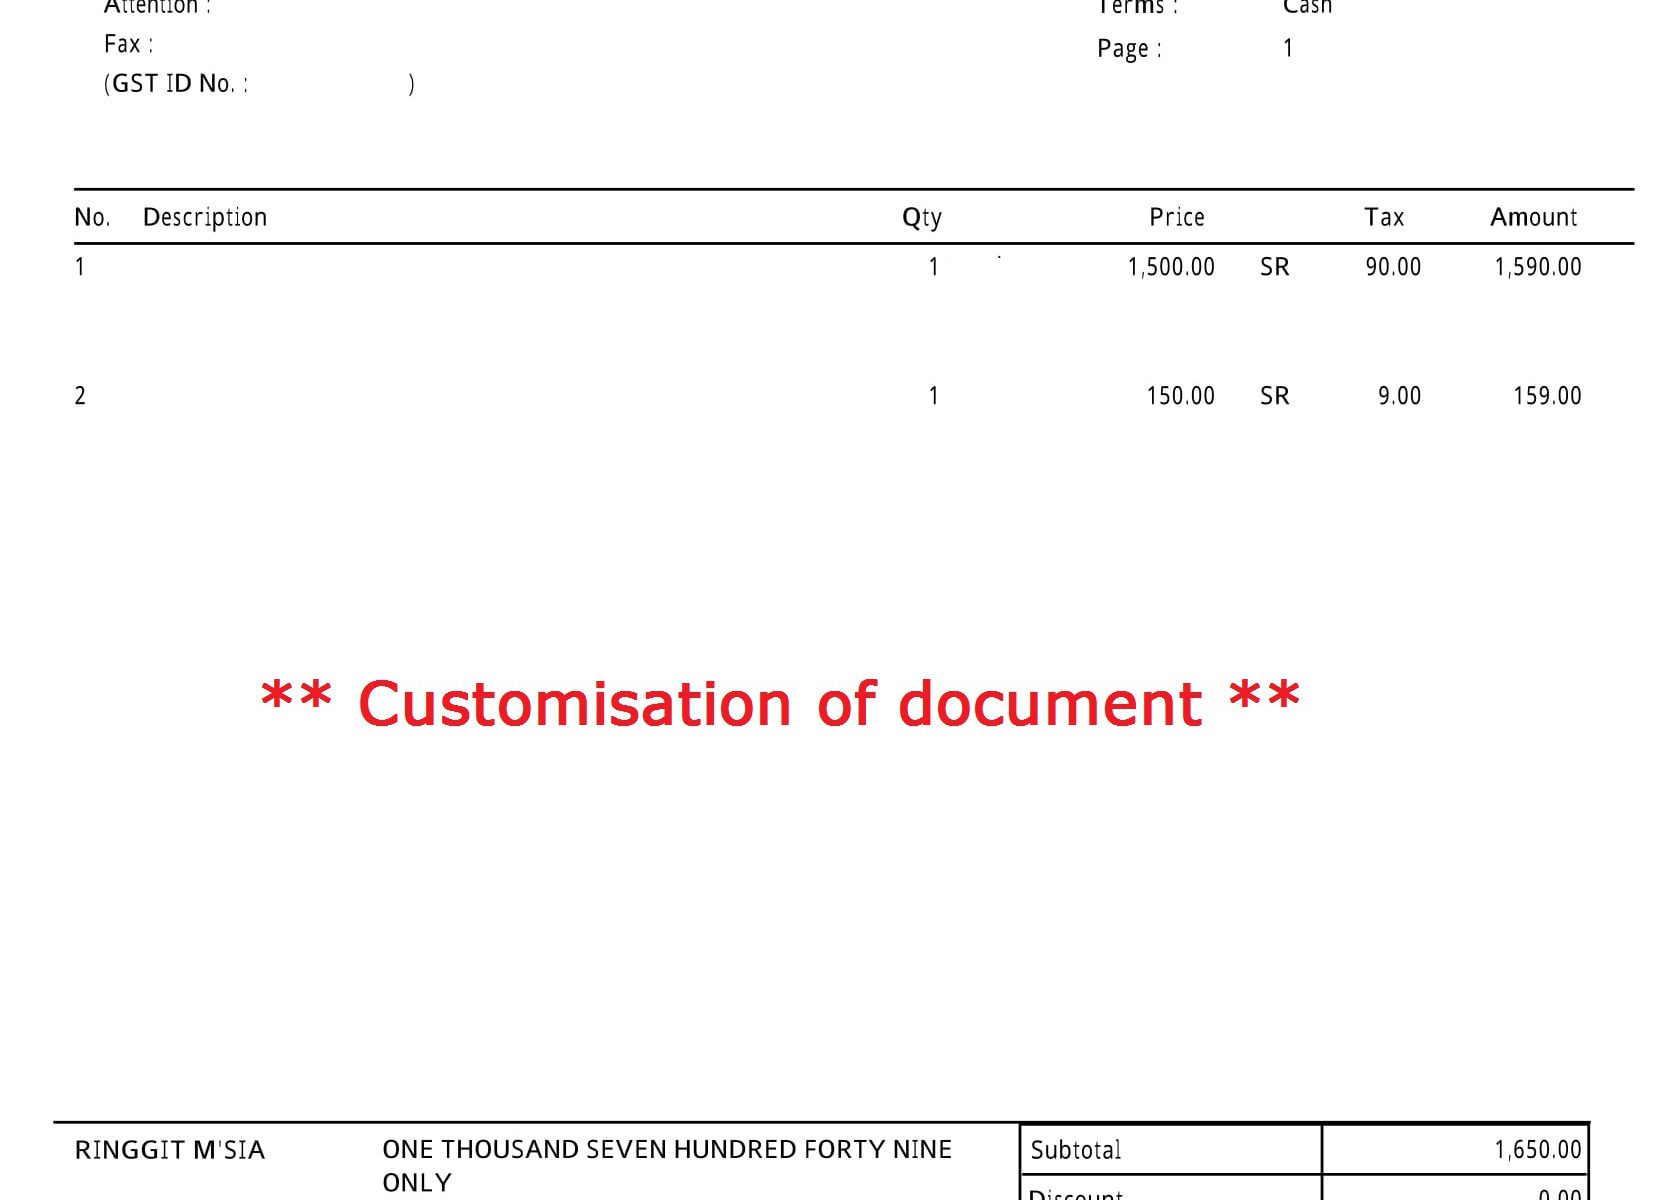 Customisation of document